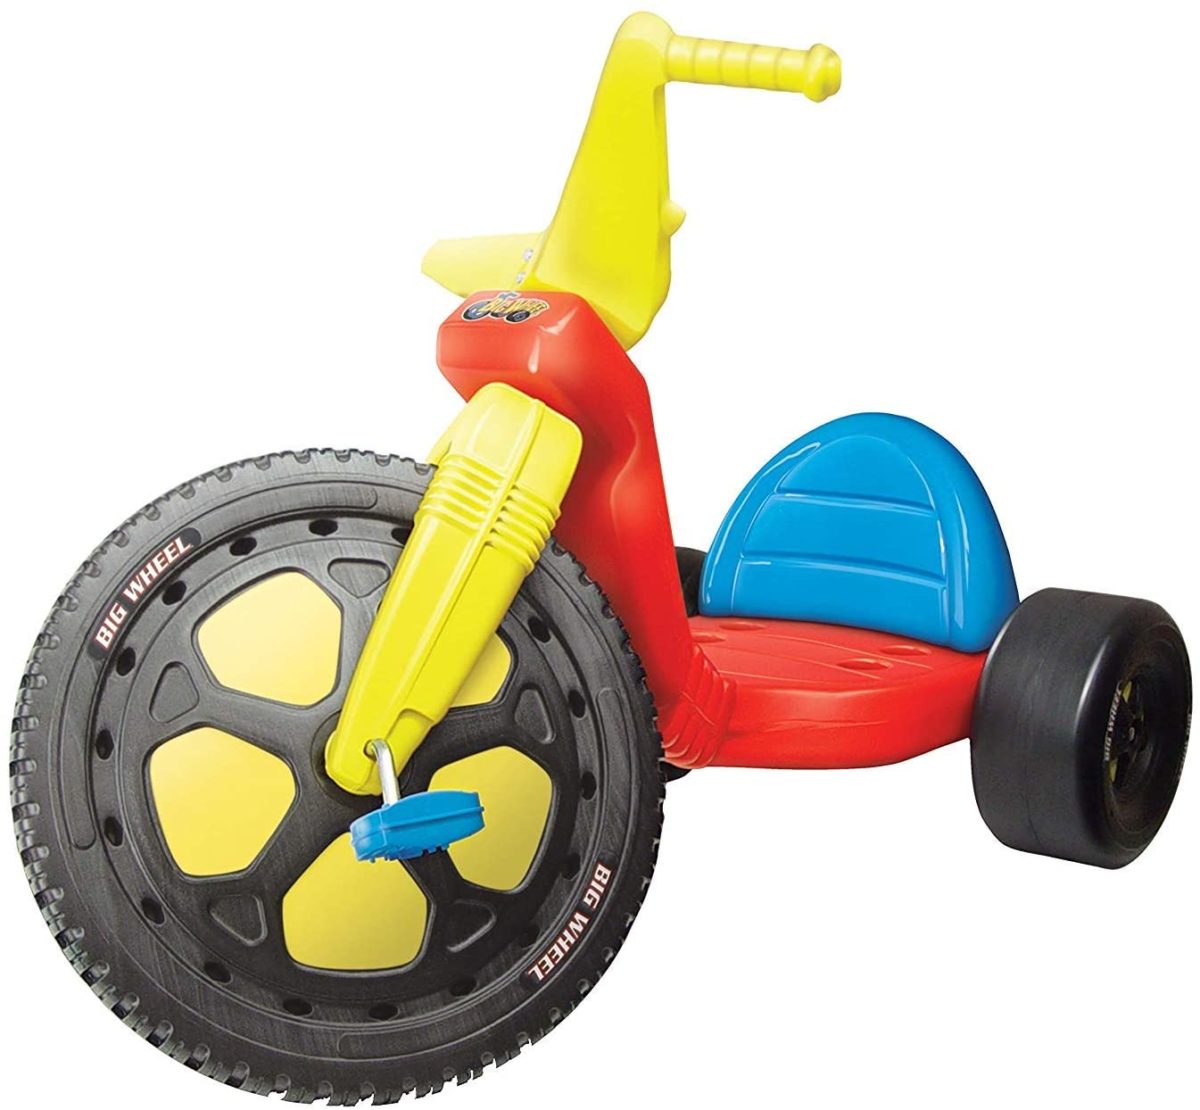 big wheels for kids